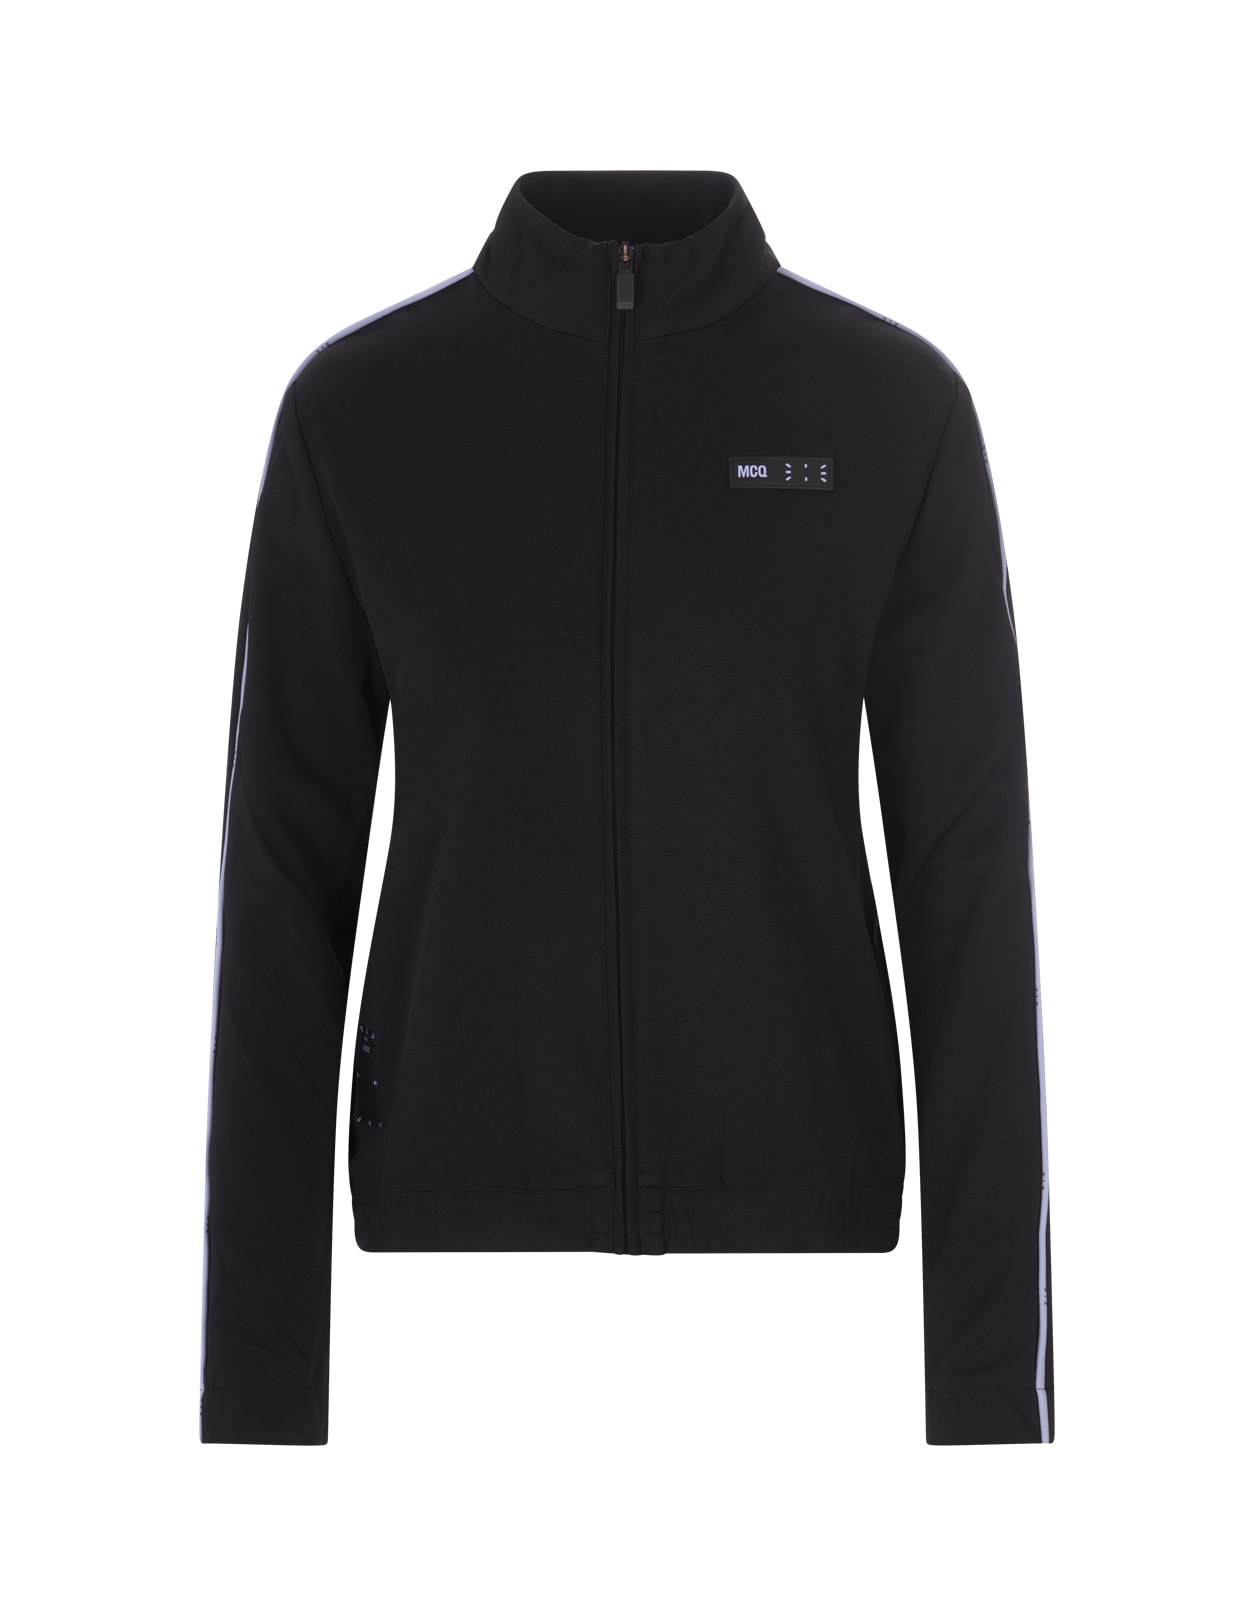 McQ Alexander McQueen Woman Black Zipped Sweatshirt With Logo